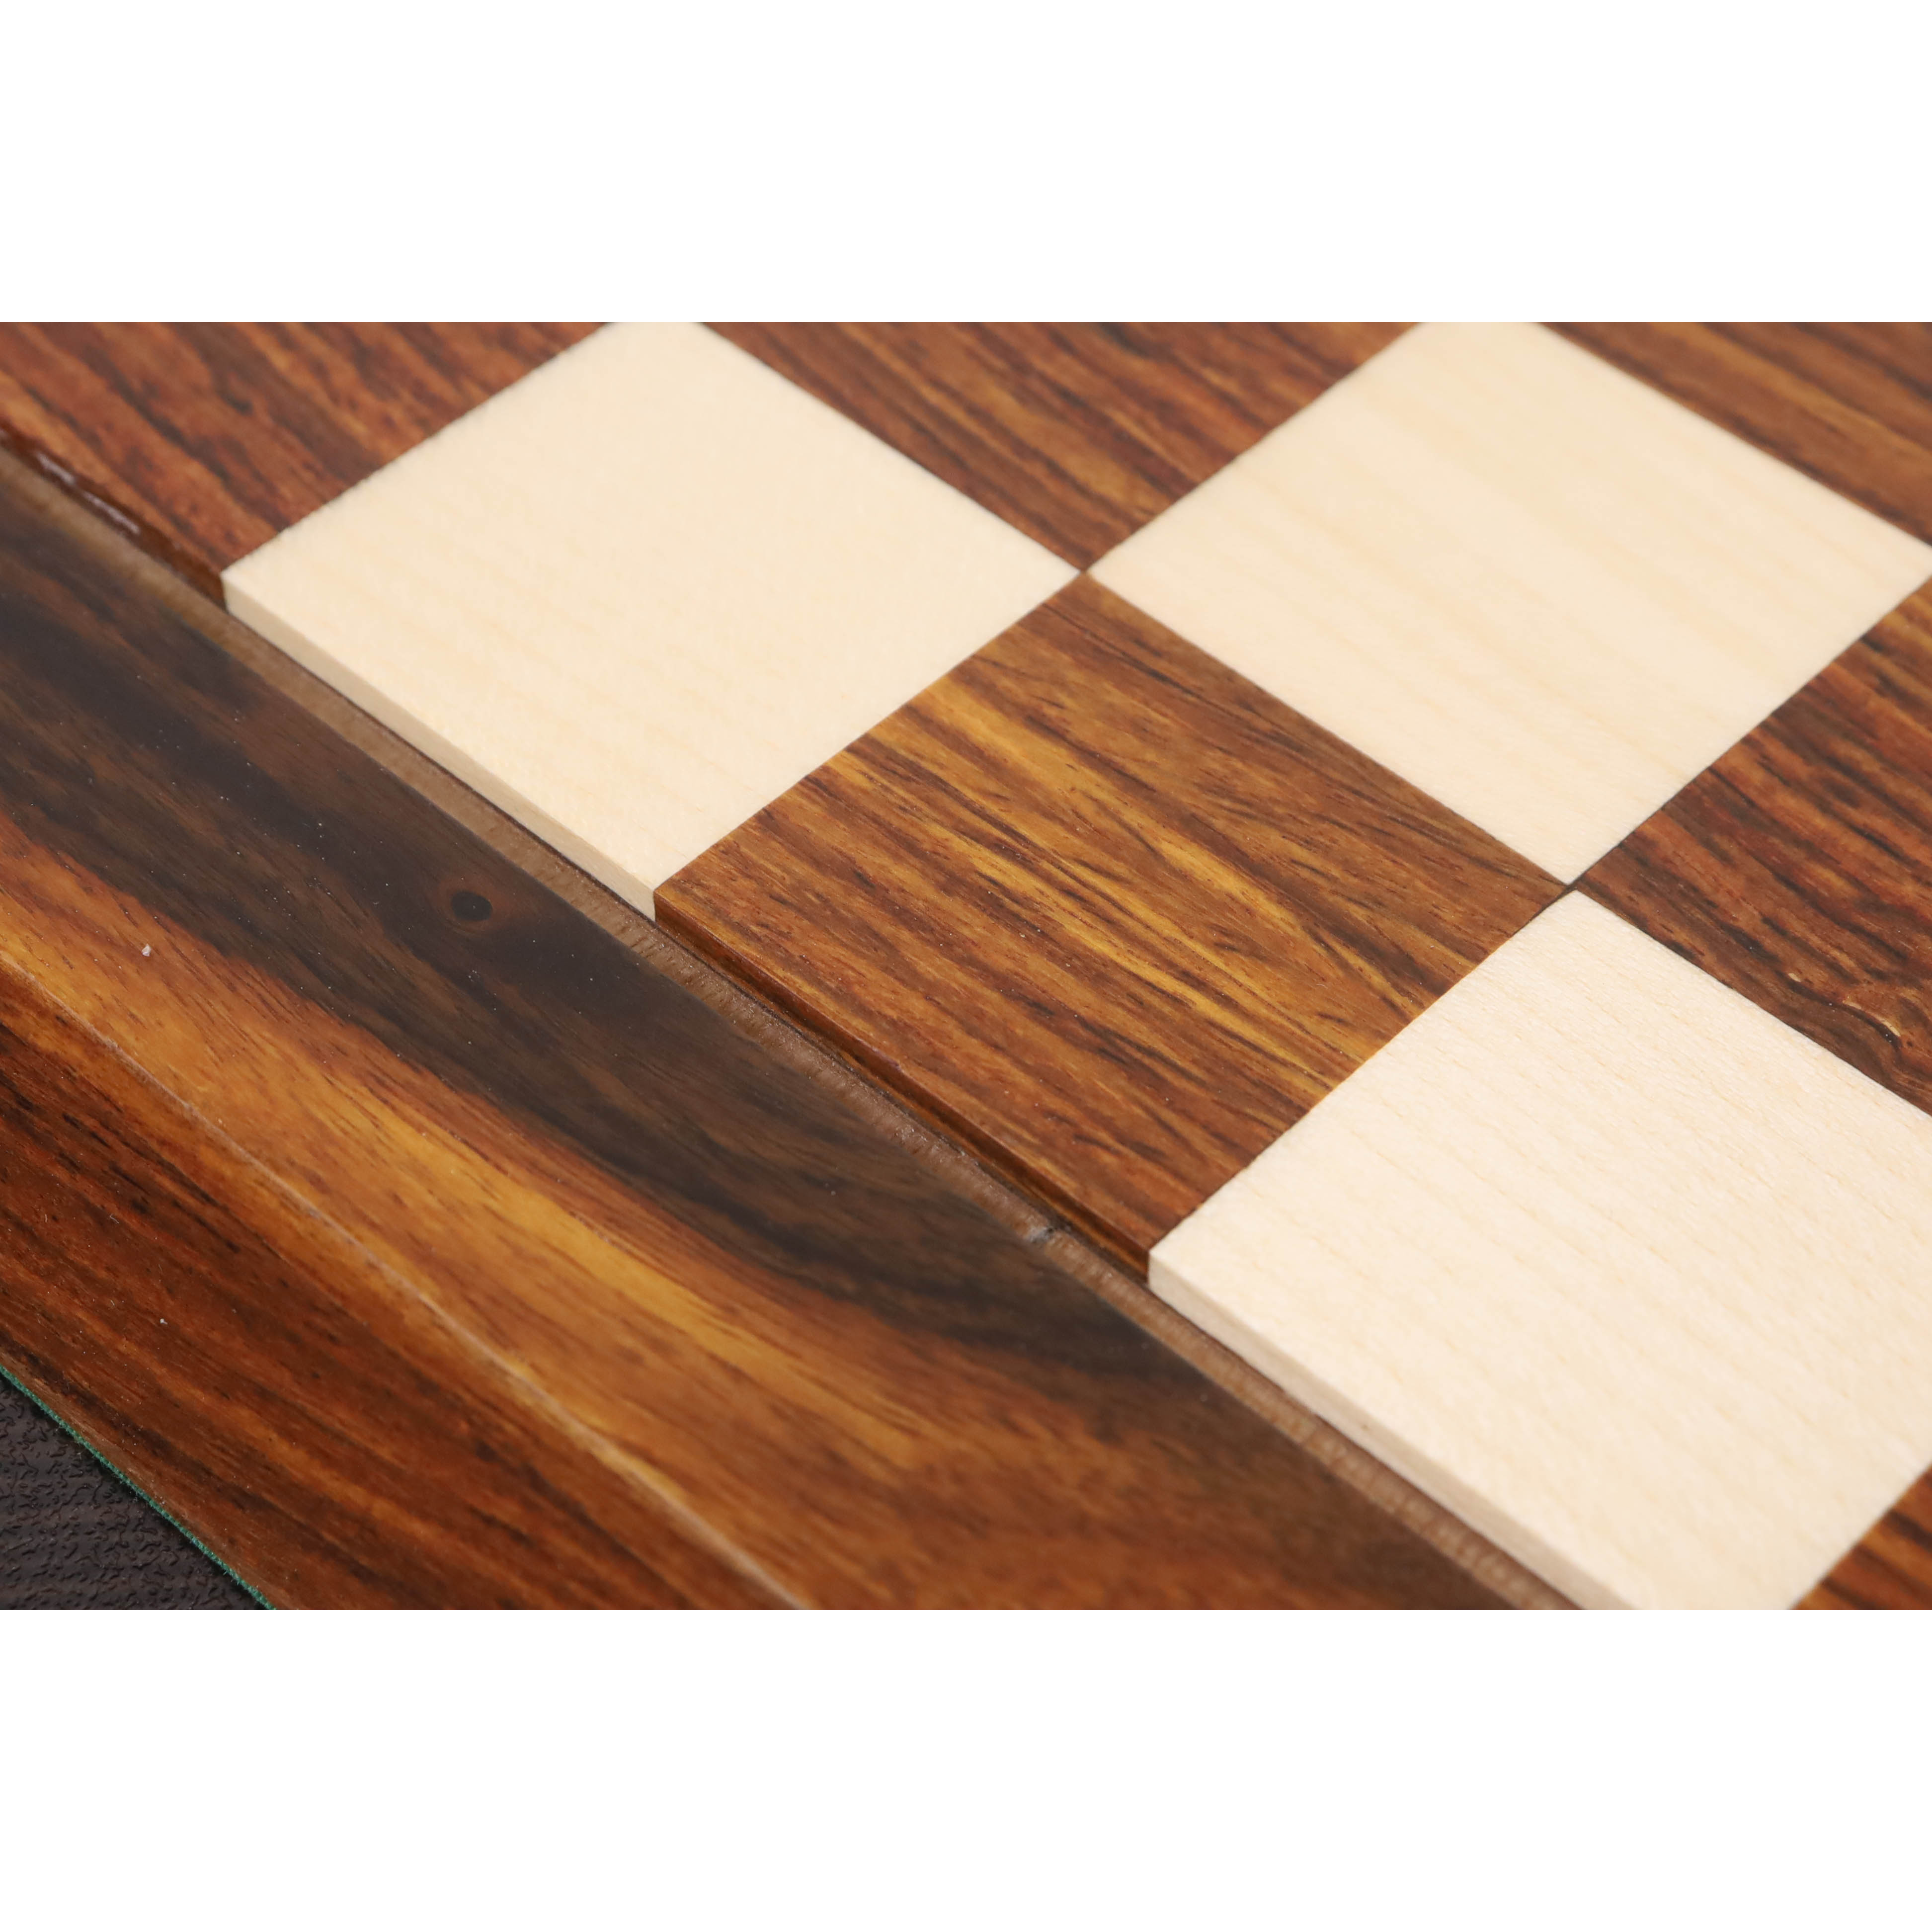 15" Drueke Style Golden Rosewood & Maple Wood Chess board - 38 mm square